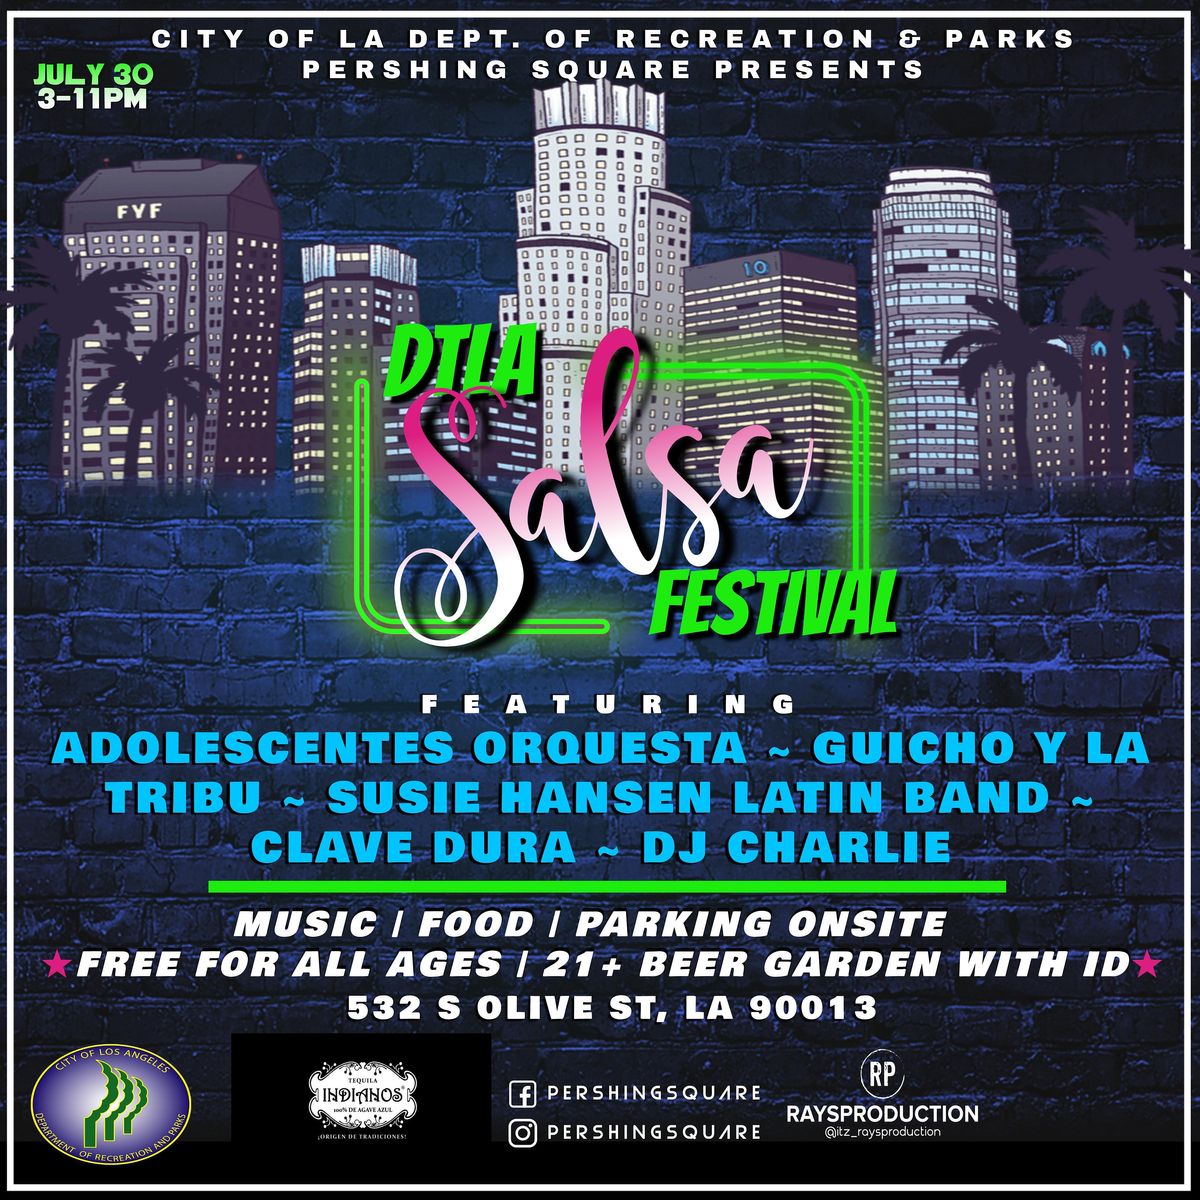 DTLA Salsa Festival